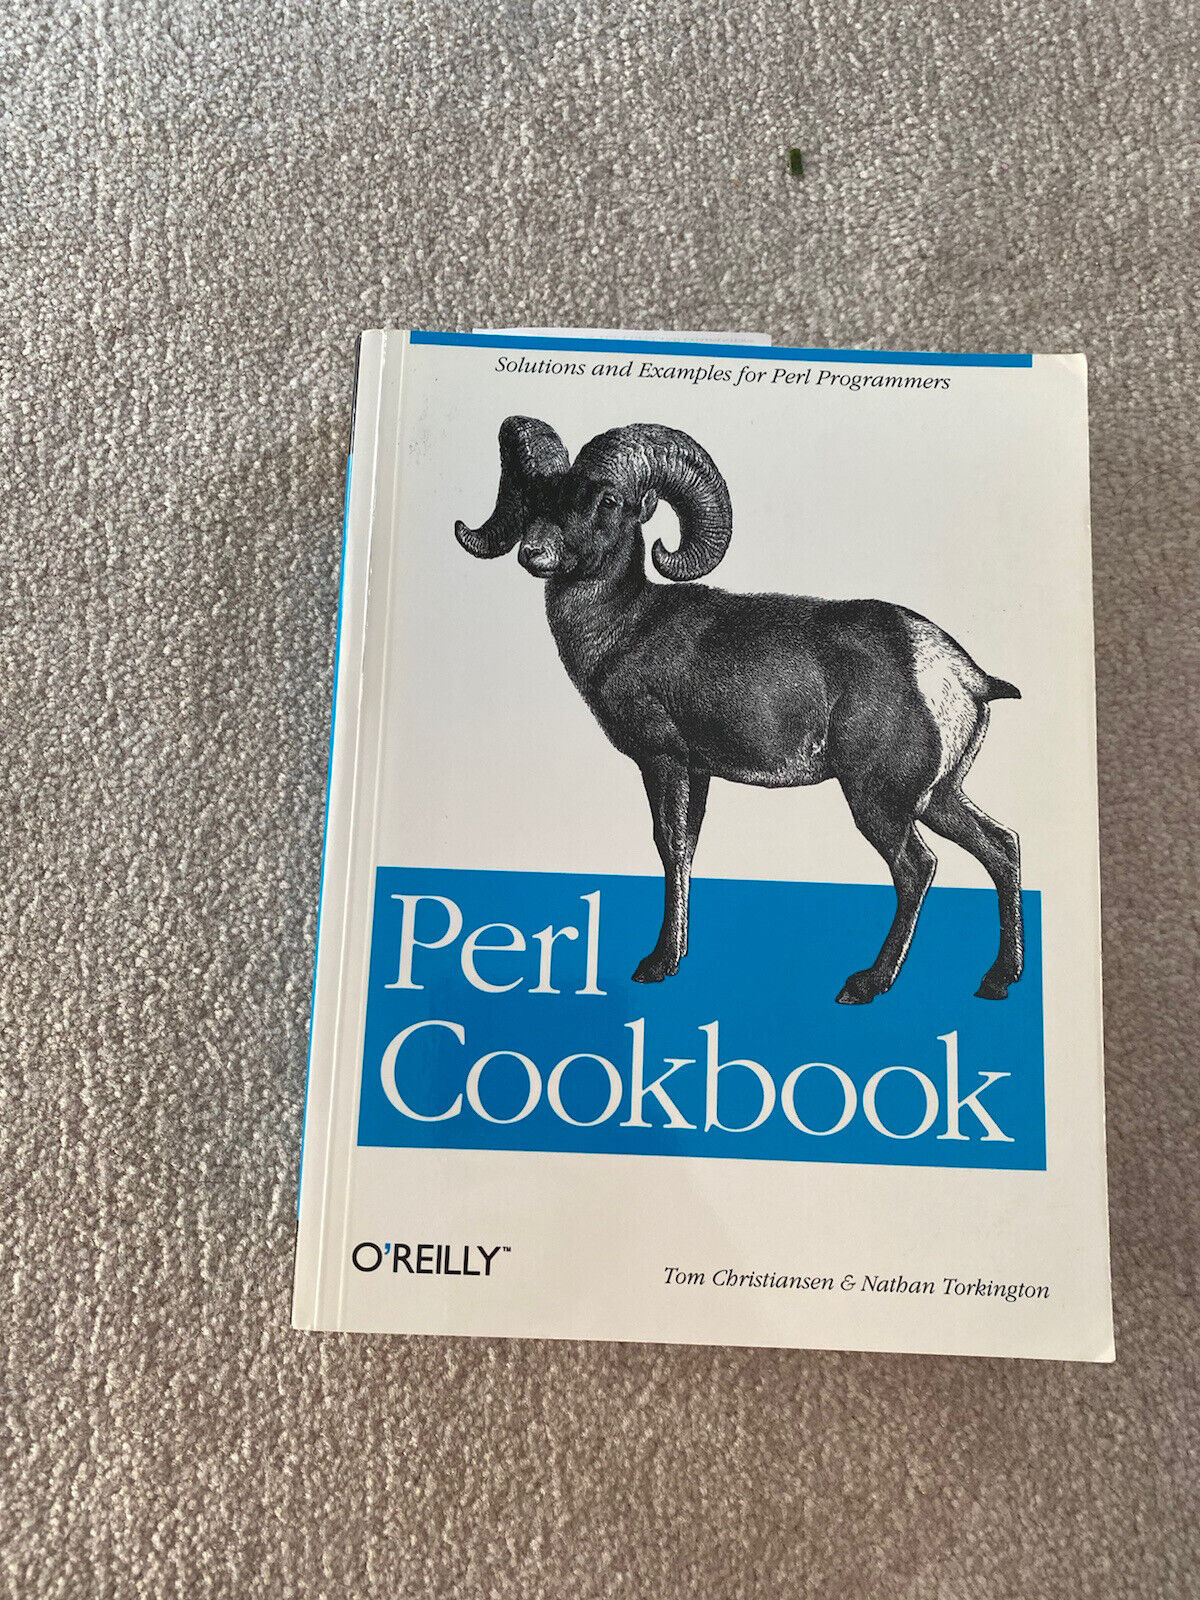 Perl Cook book tTKbc